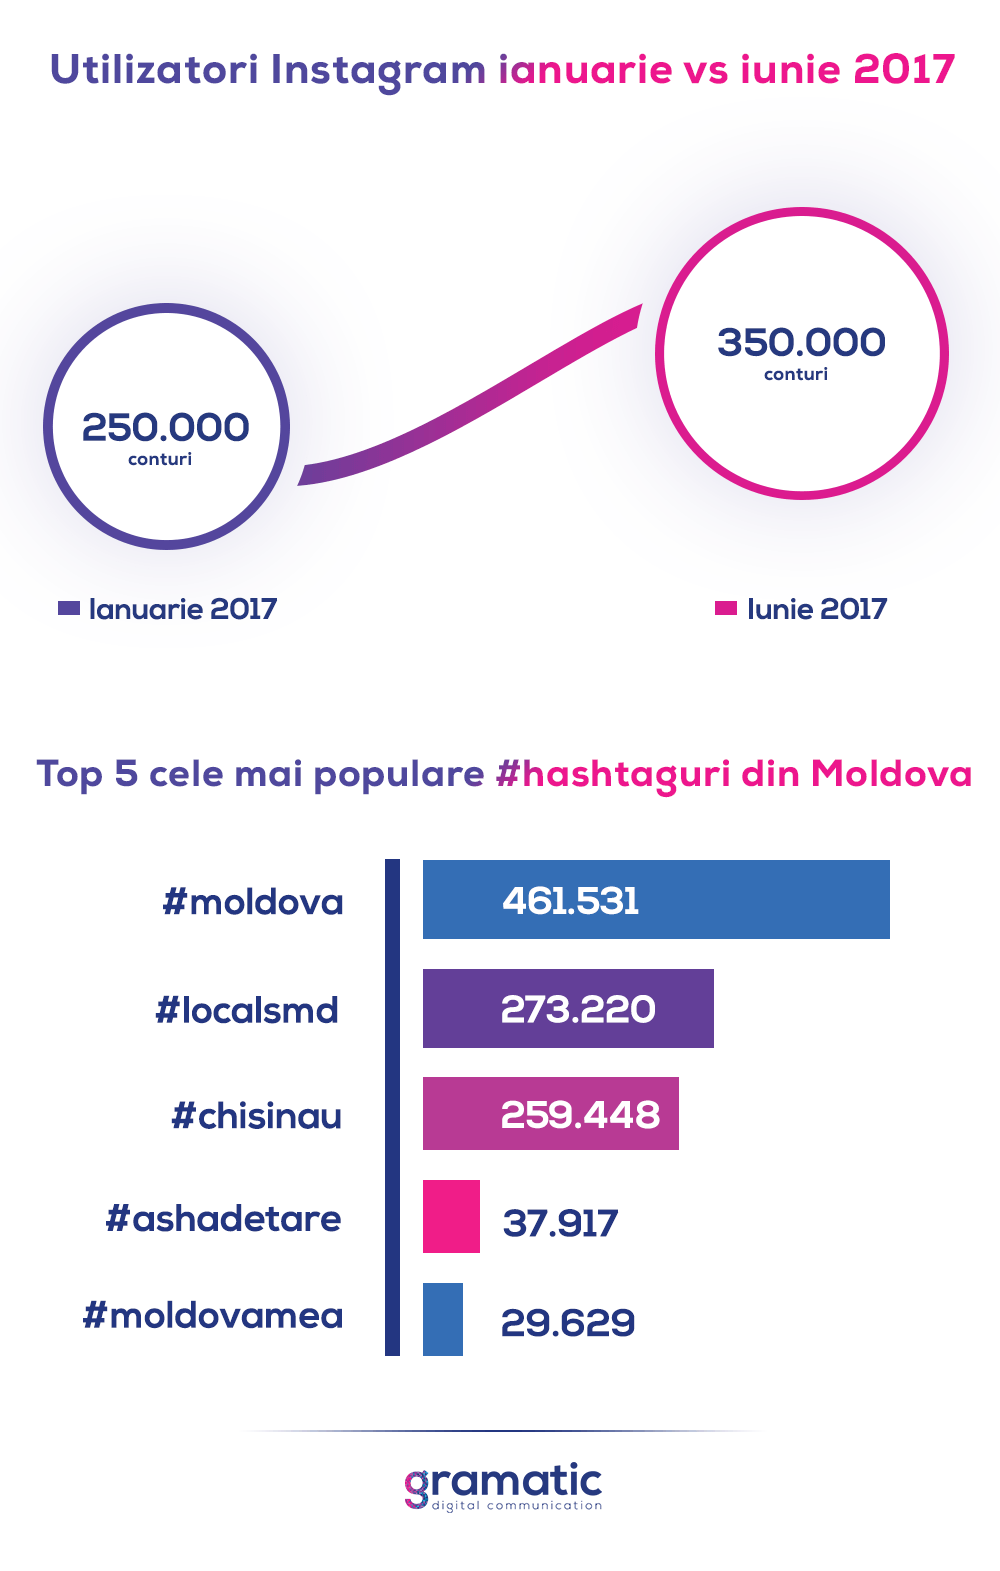 Topul celor mai populari moldoveni pe Instagram. Pe ce loc e Xenia Deli, Renato Usatii sau Iuliana Beregoi